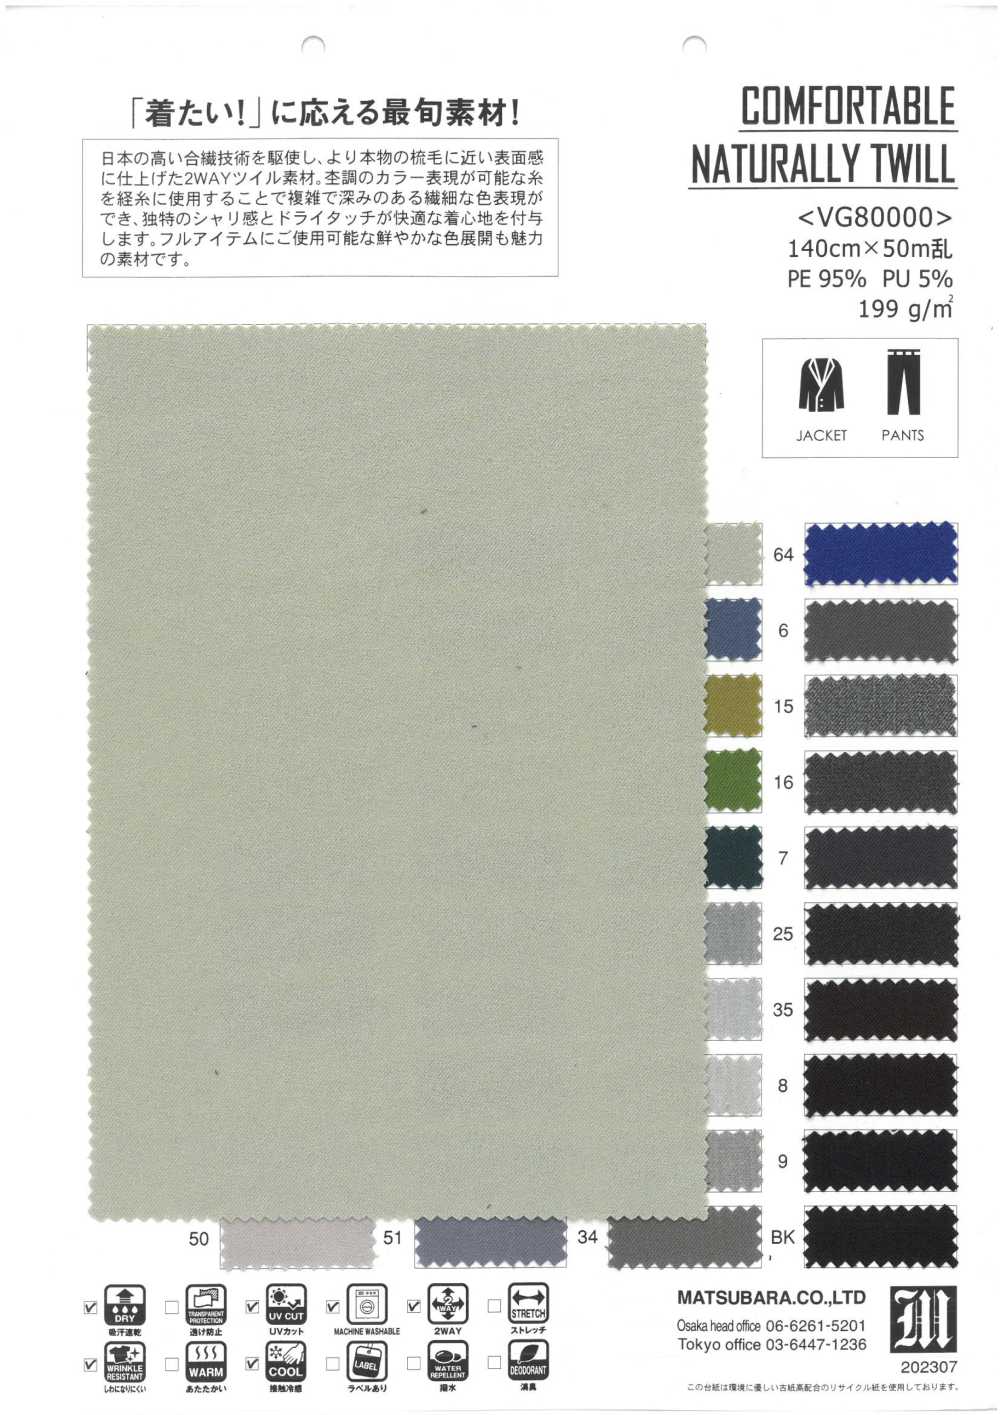 VG80000 COMFORTABLE NATURALLY TWILL[Textile / Fabric] Matsubara